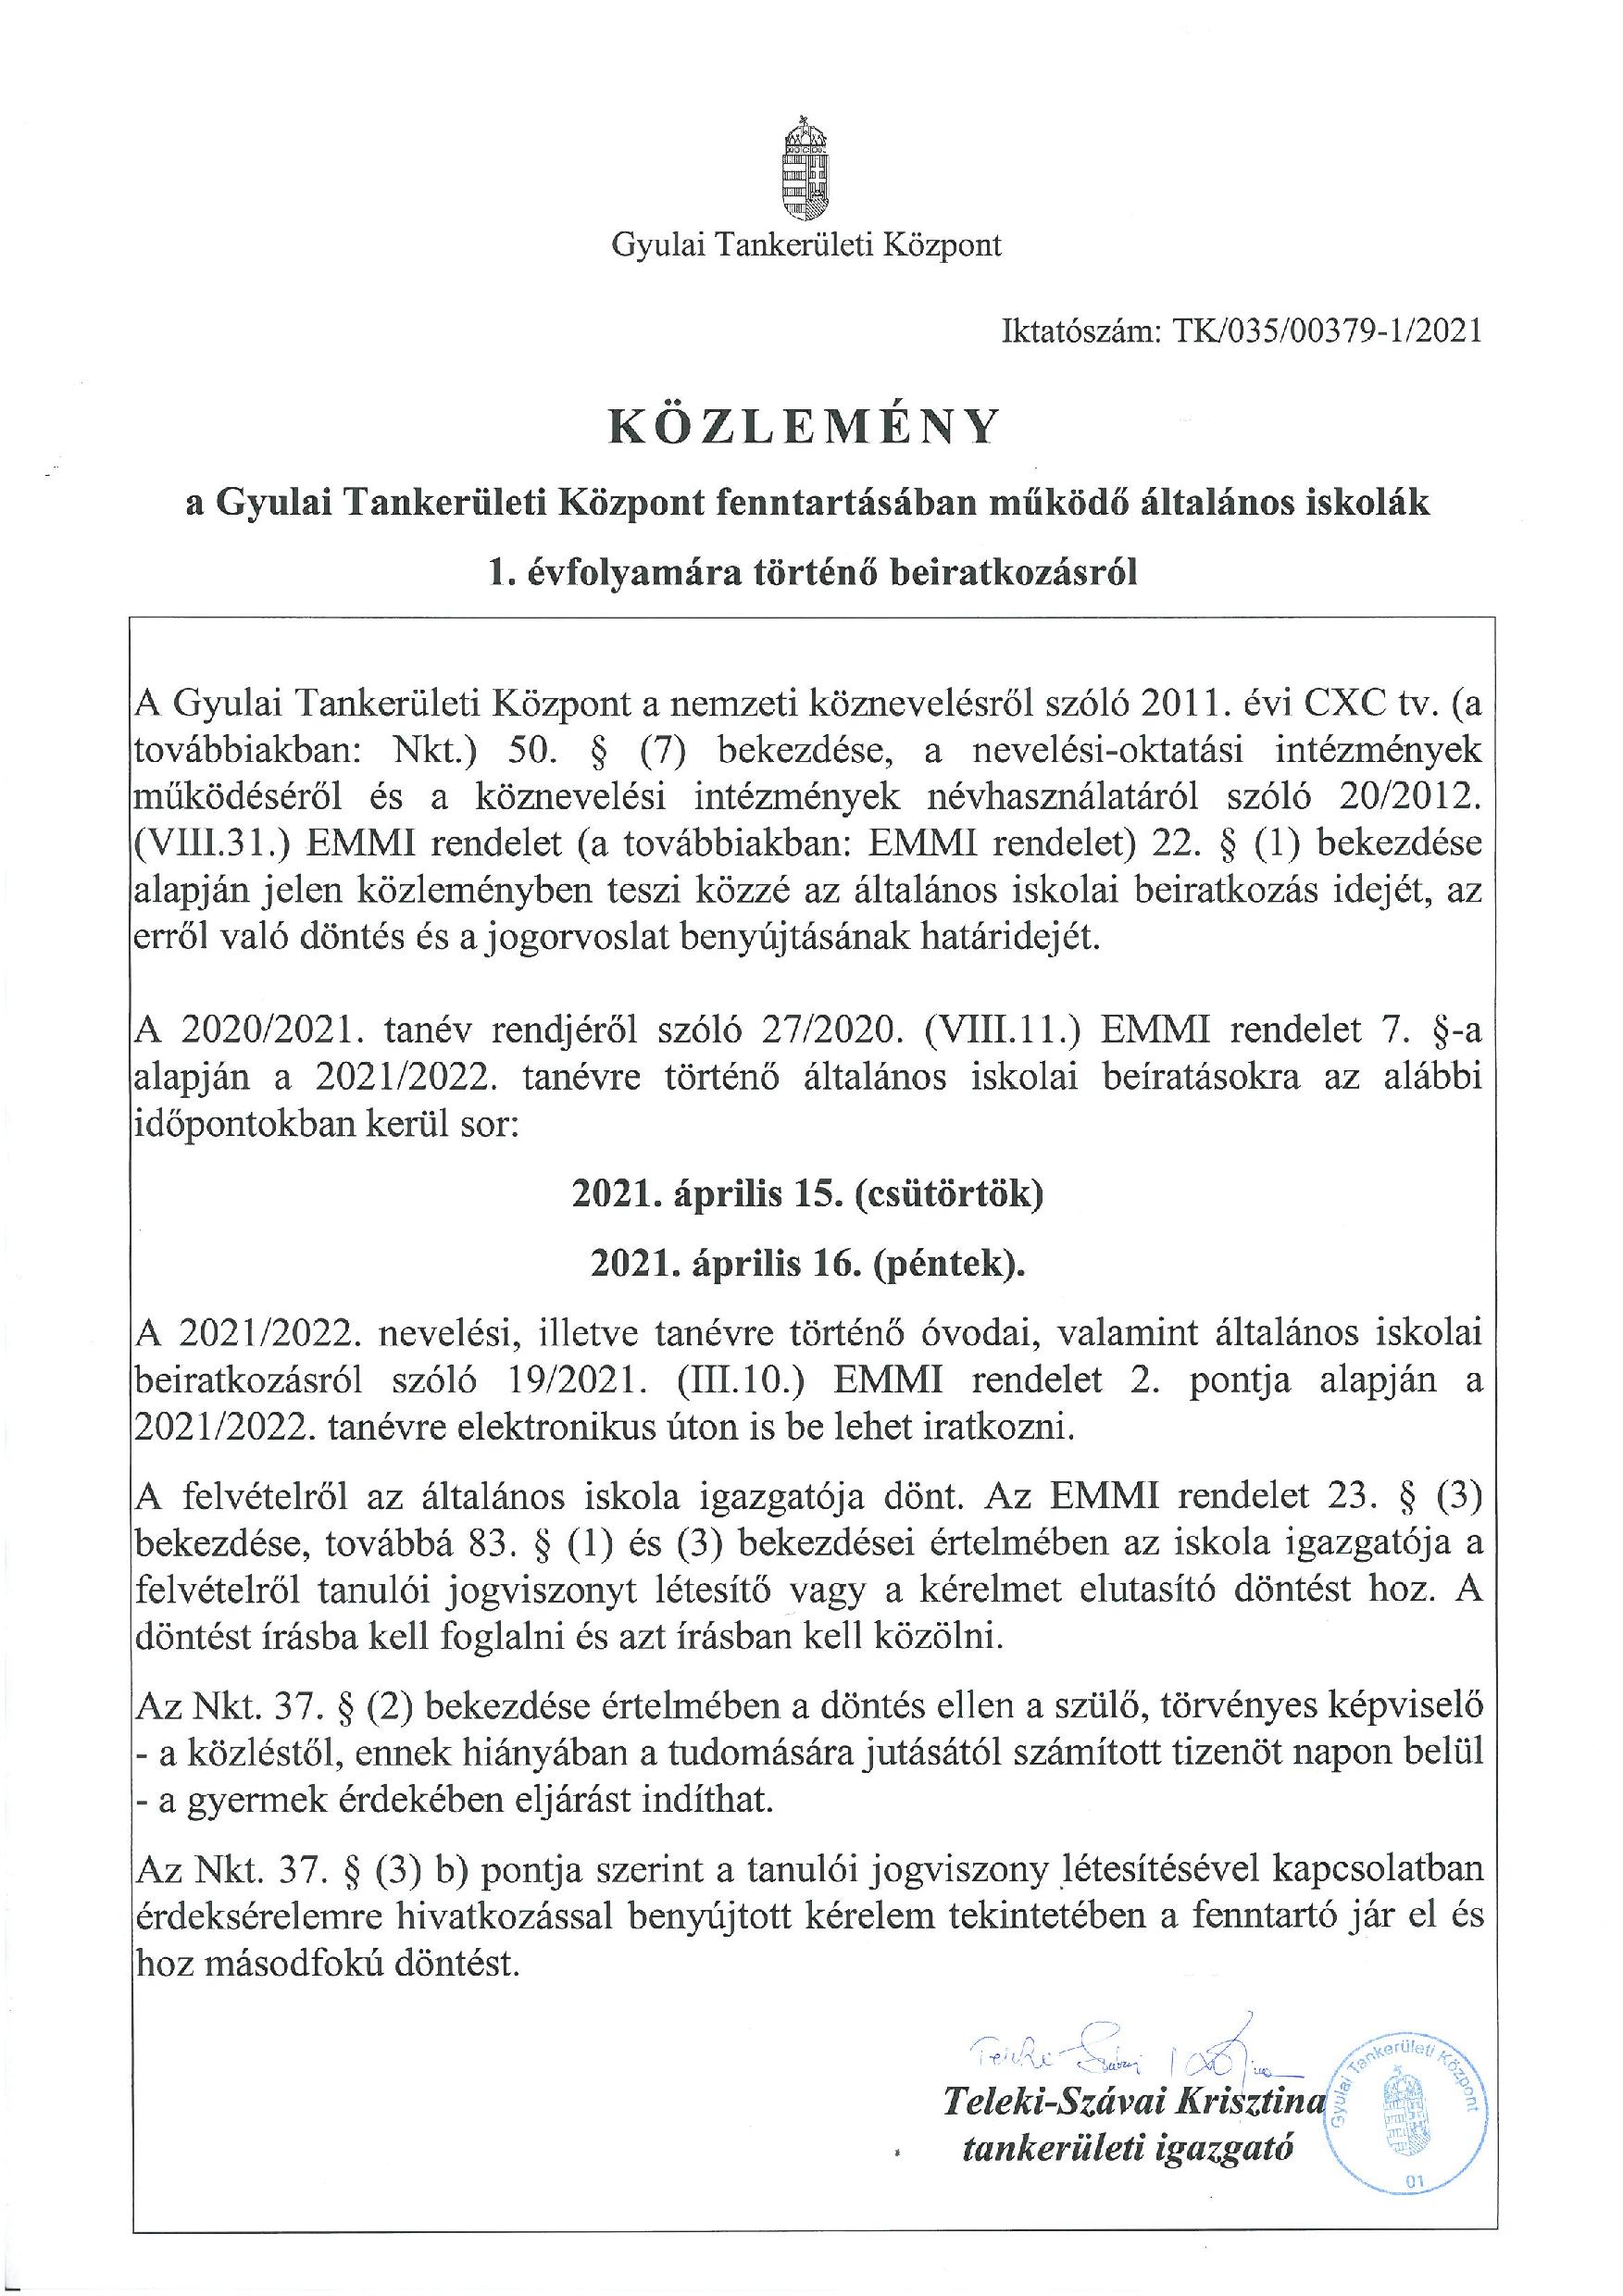 Gyula TK Alt Isk beiratkozas Kozlemeny page 001